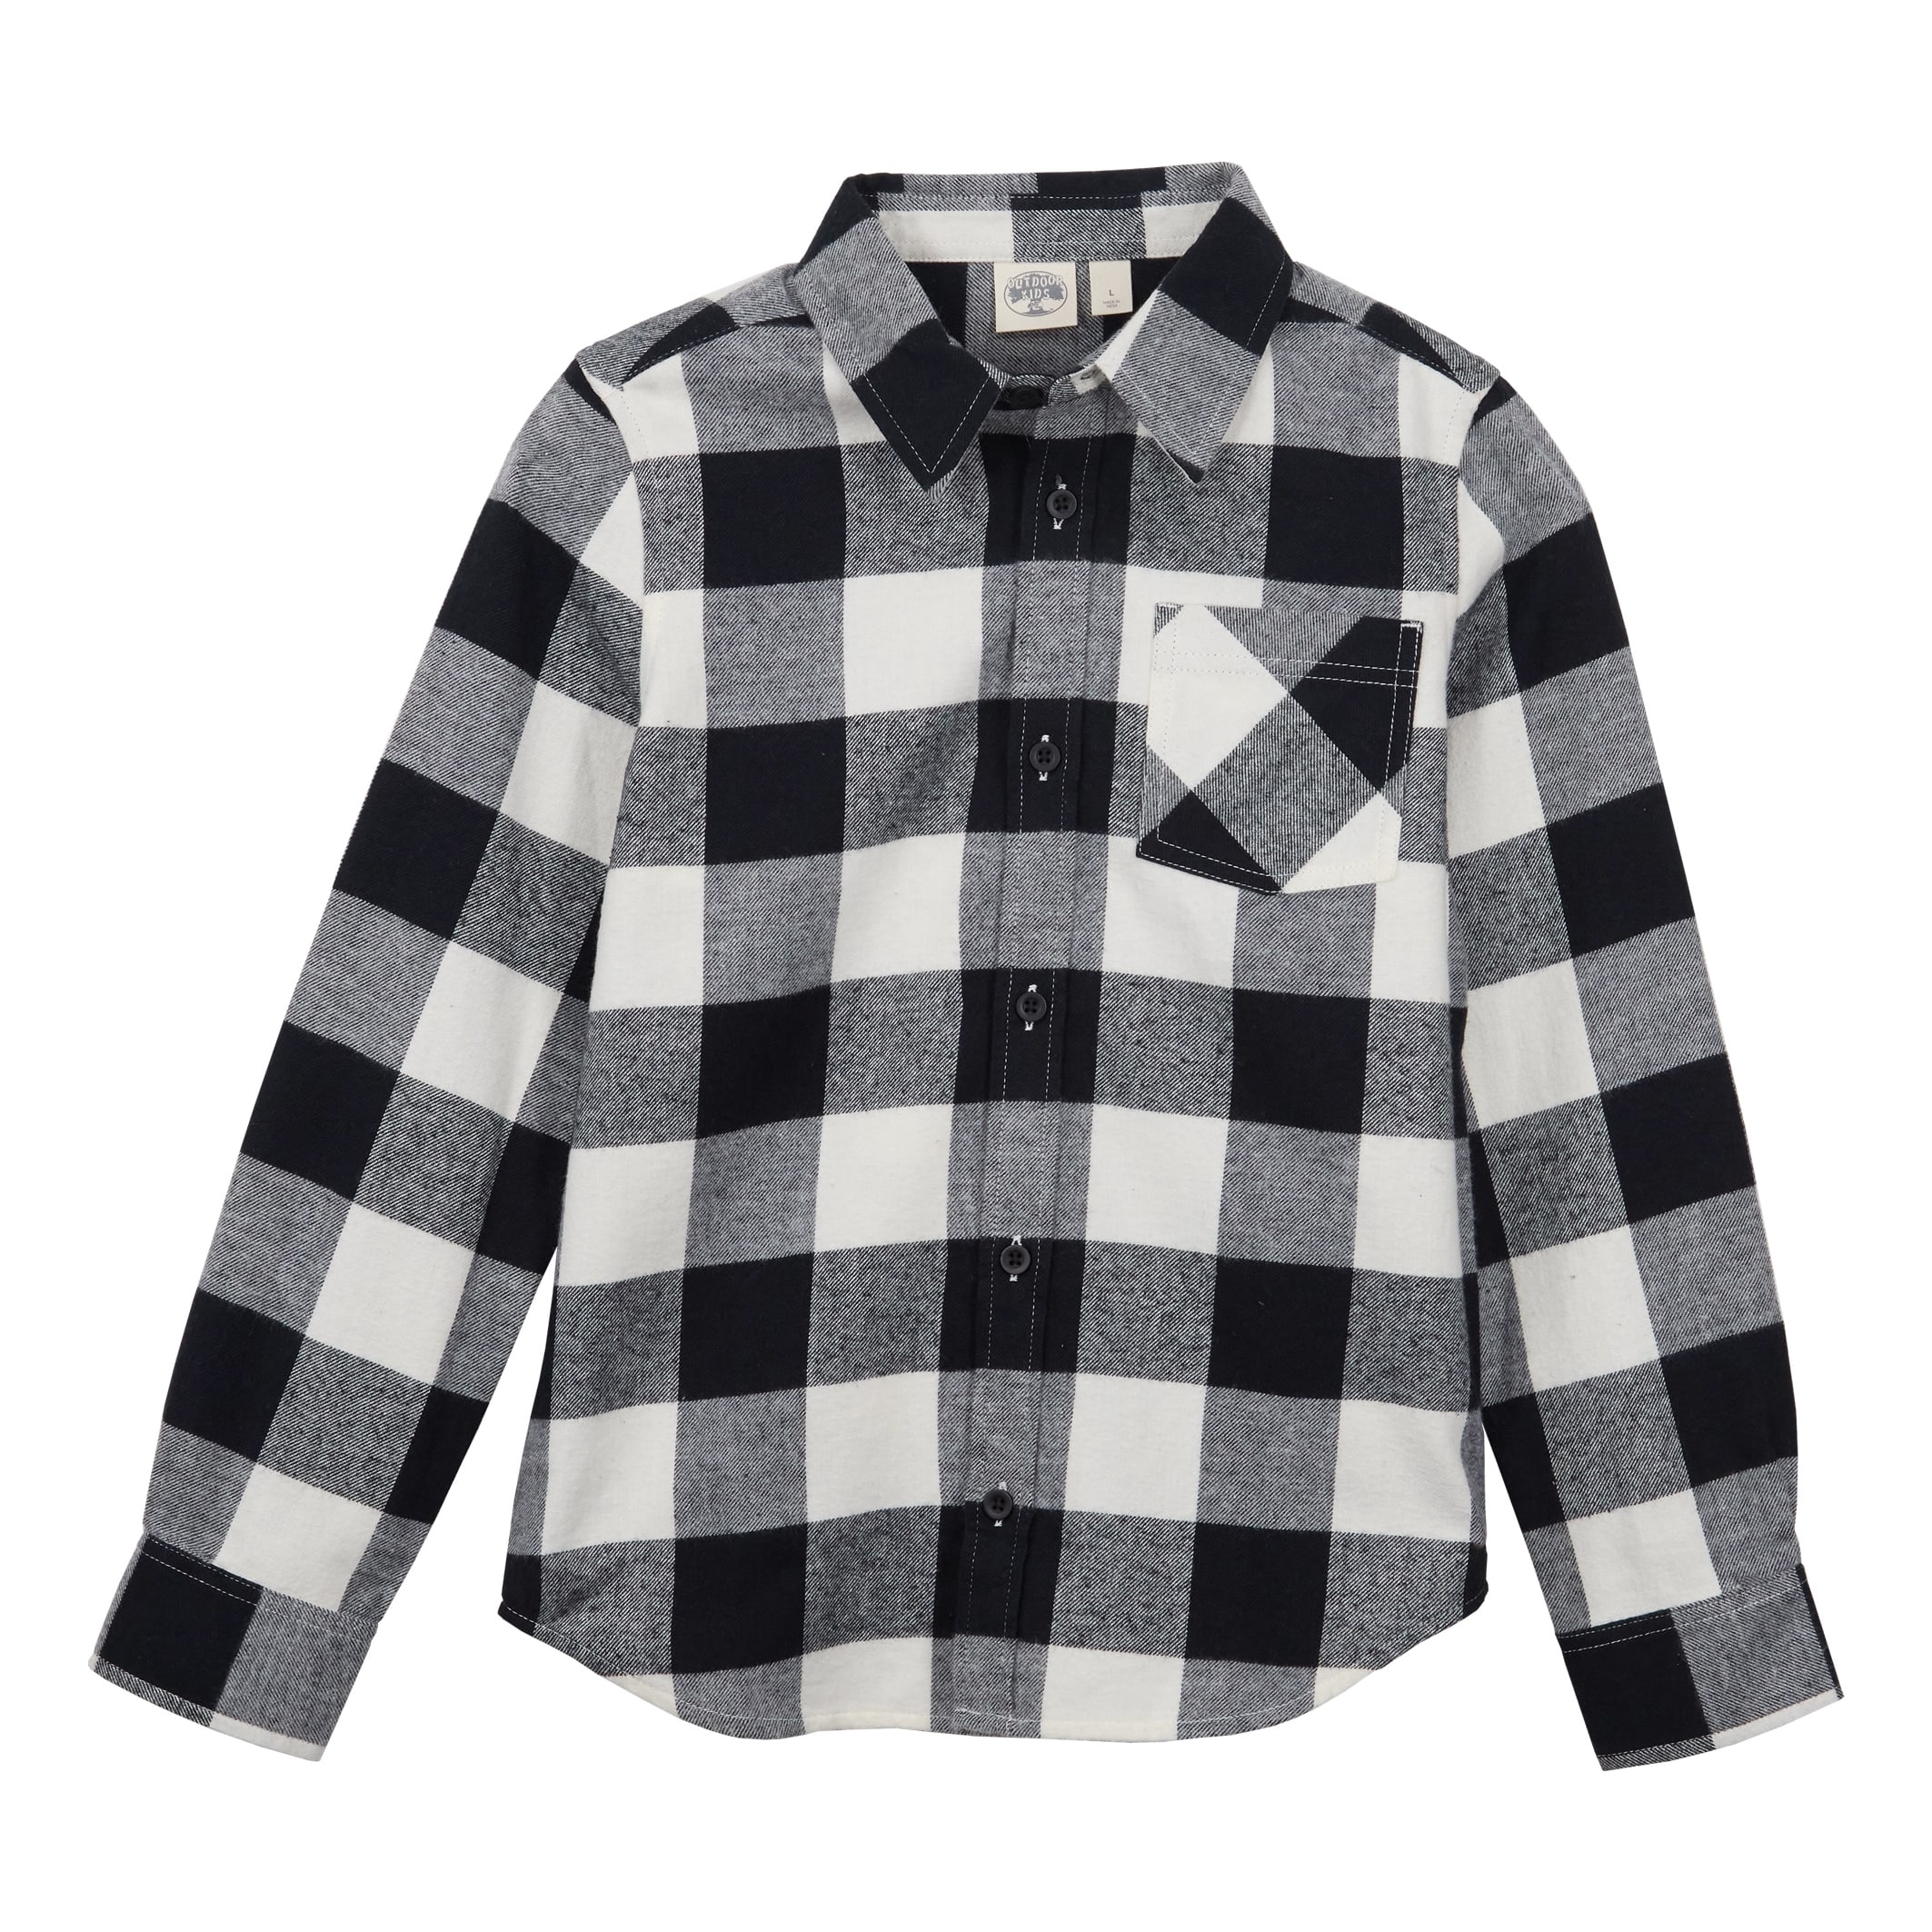 Bass Pro Shops® Girls’ Long-Sleeve Flannel Button-Down Shirt - Cream Black Buffalo